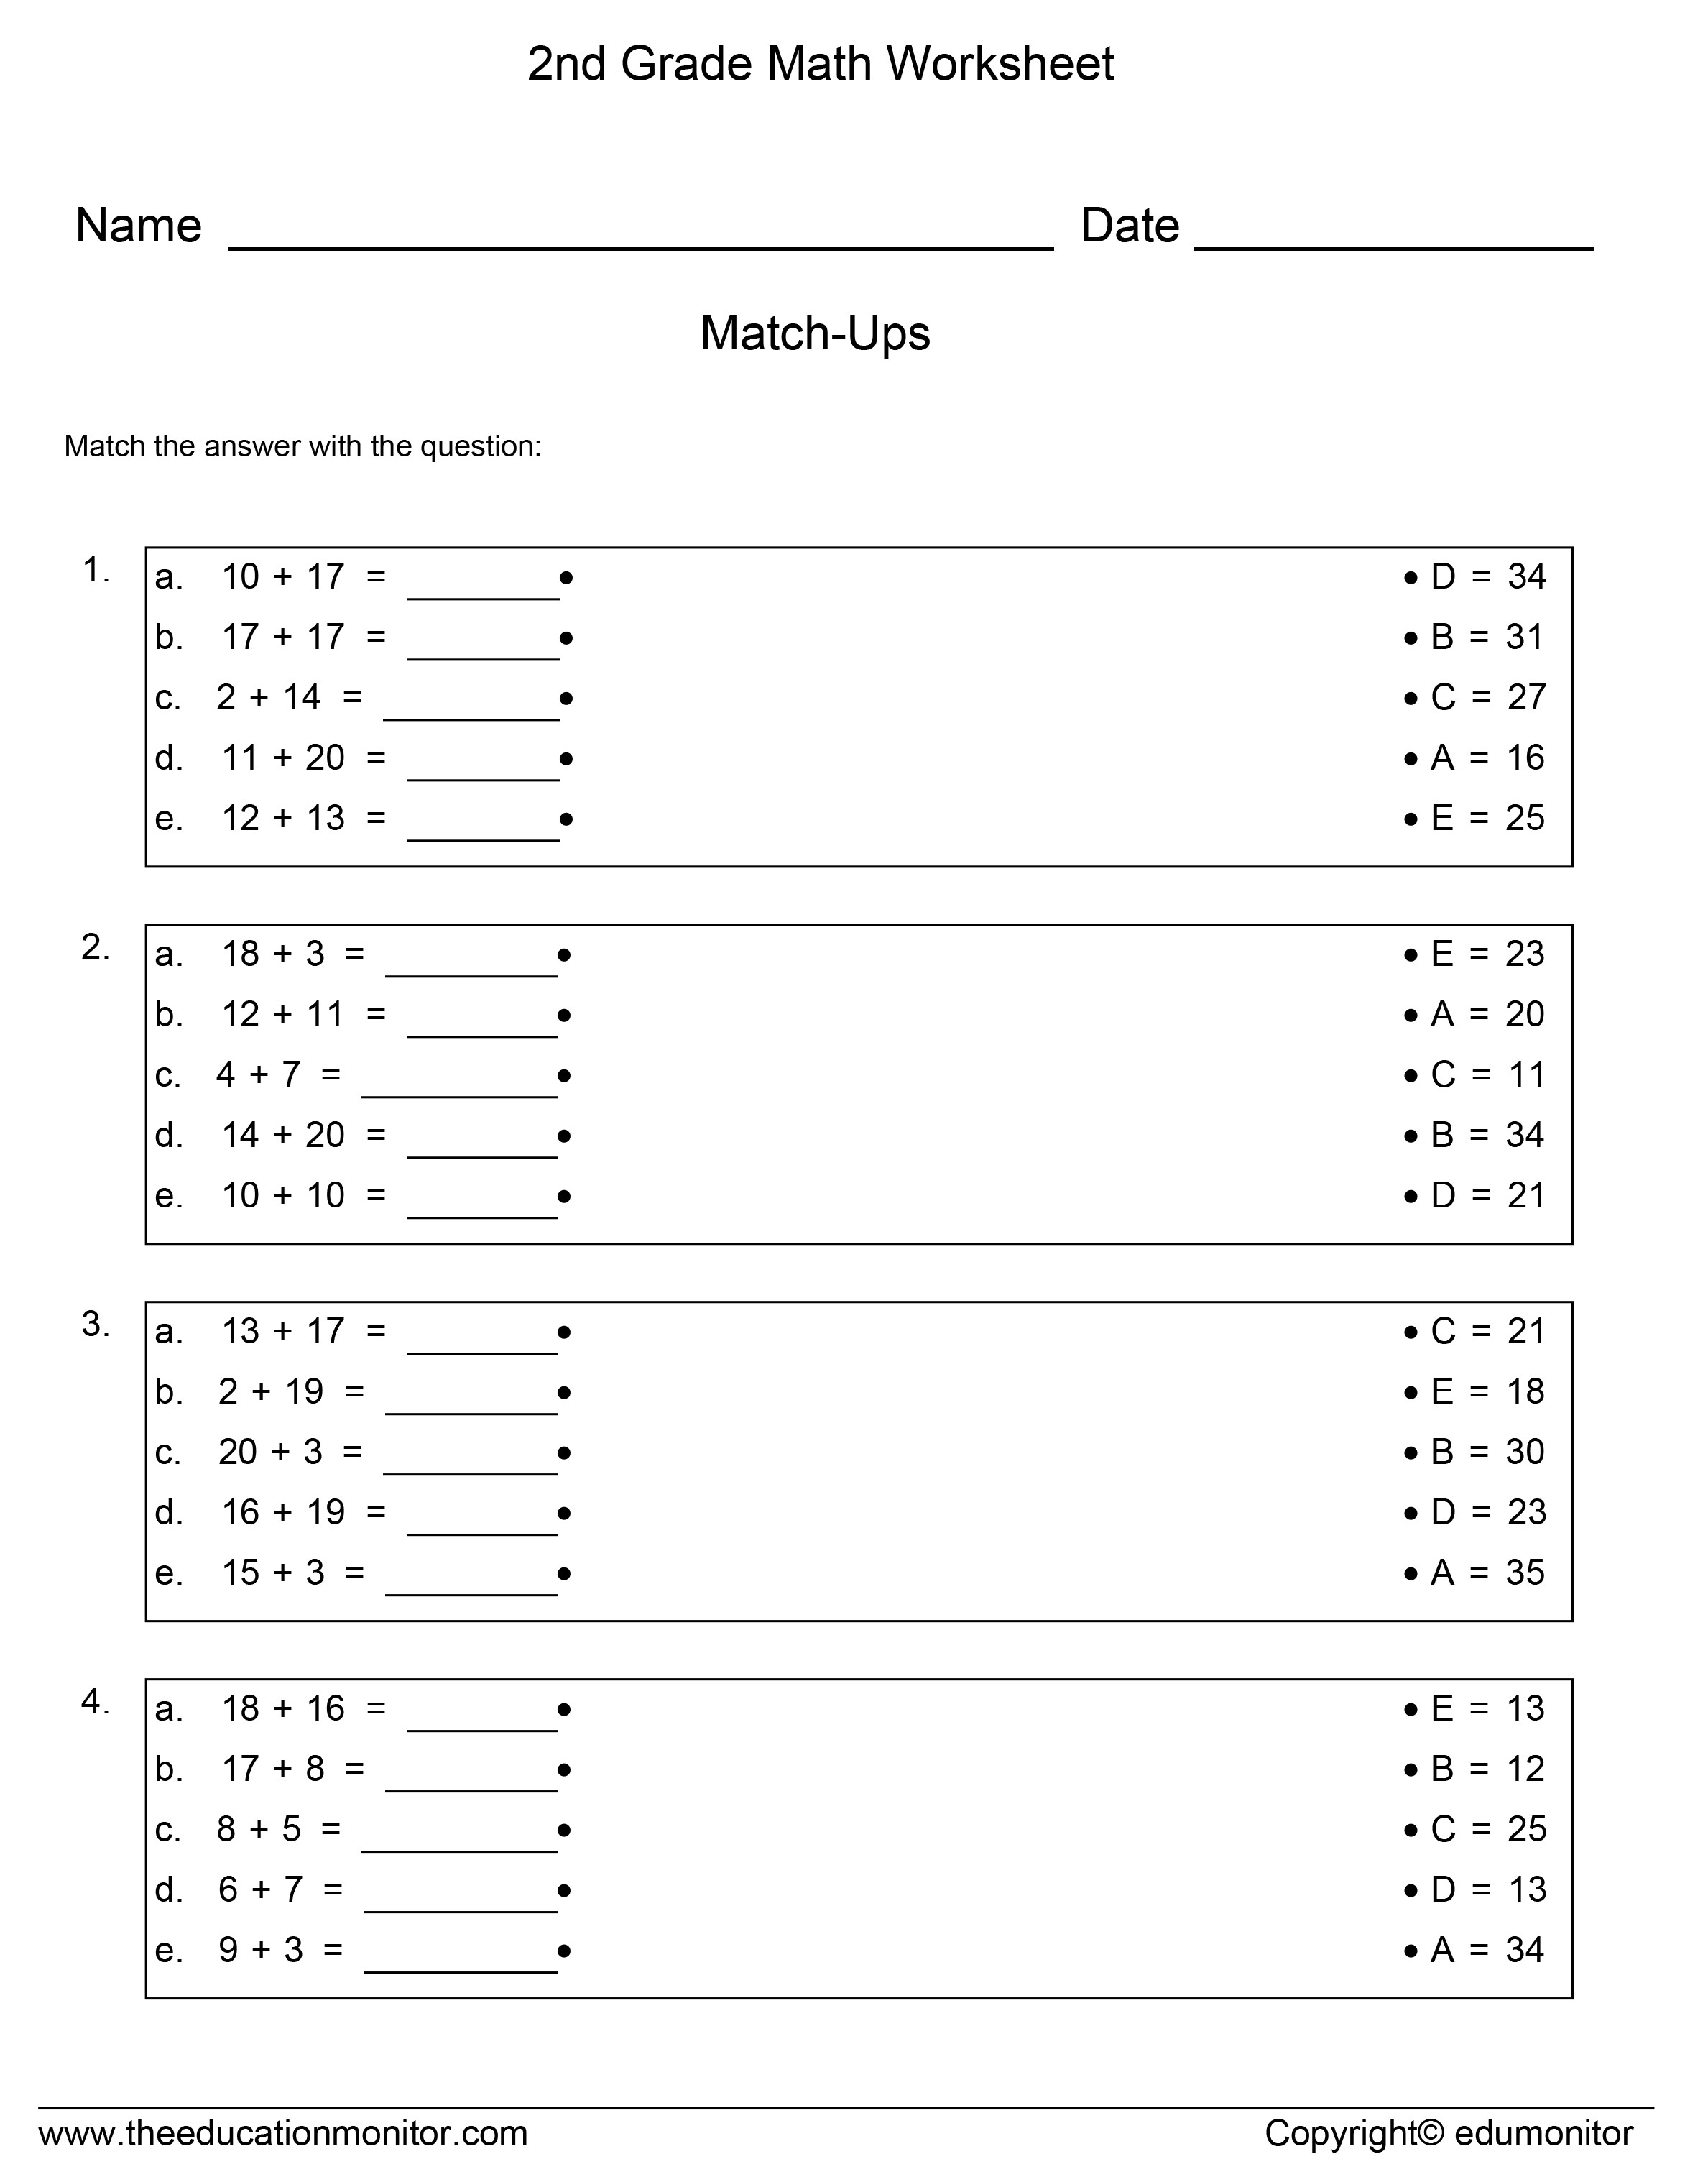 Second Grade Math Worksheet, Free Practice Printable Activities - Free Printable Second Grade Worksheets